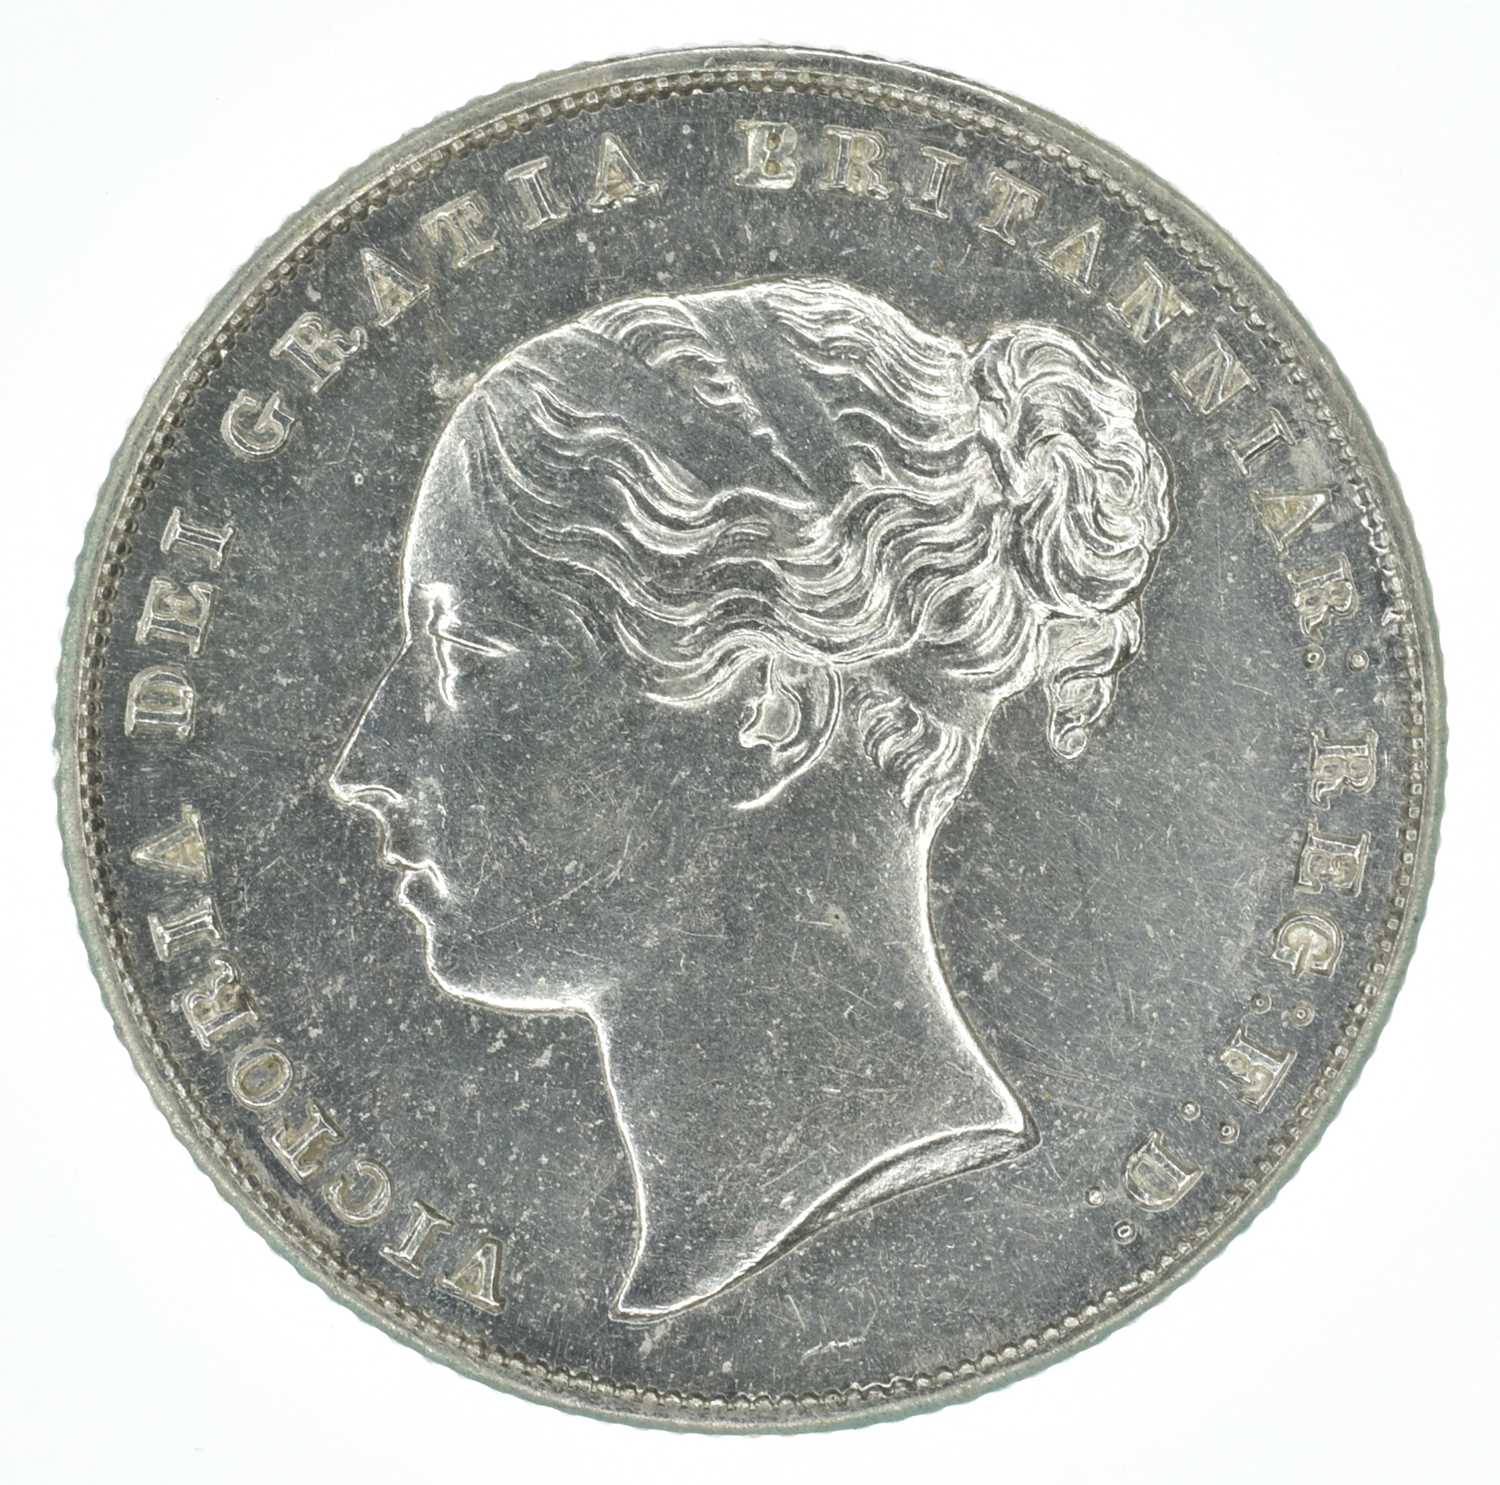 Lot 54 - Queen Victoria, Shilling, 1857, gEF.